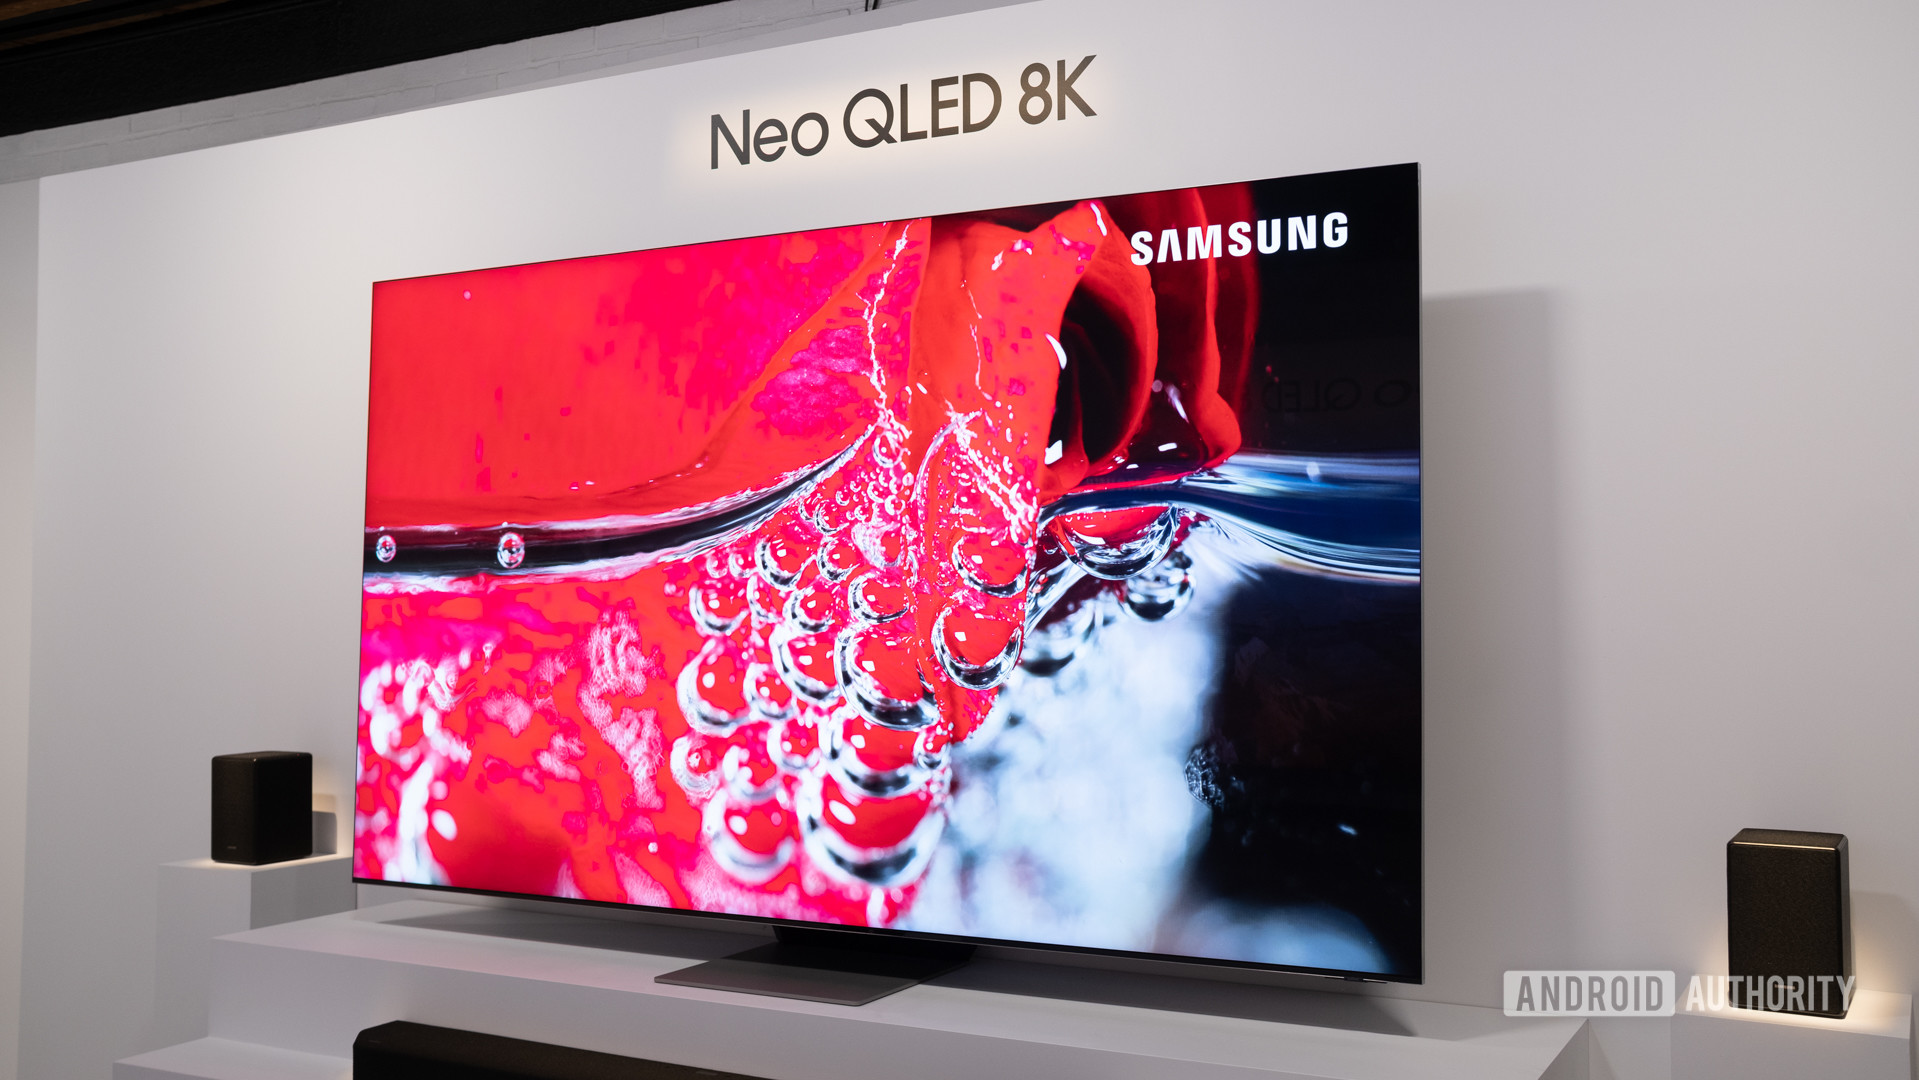 Samsung Qn900a 8k Neo Qled Tv